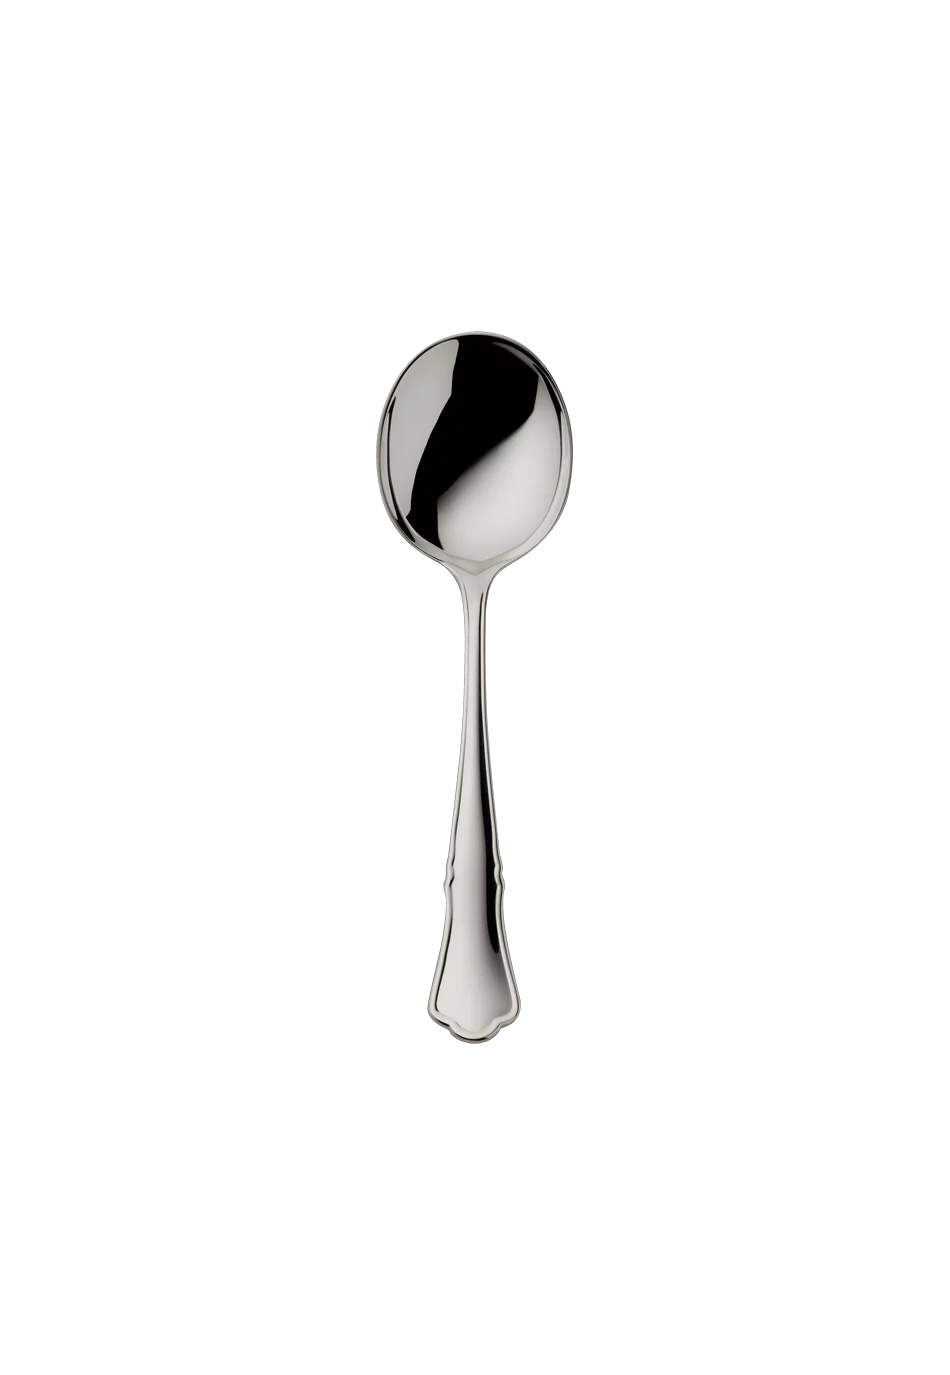 Alt-Chippendale Cream Spoon (Broth Spoon) (150g massive silverplated)